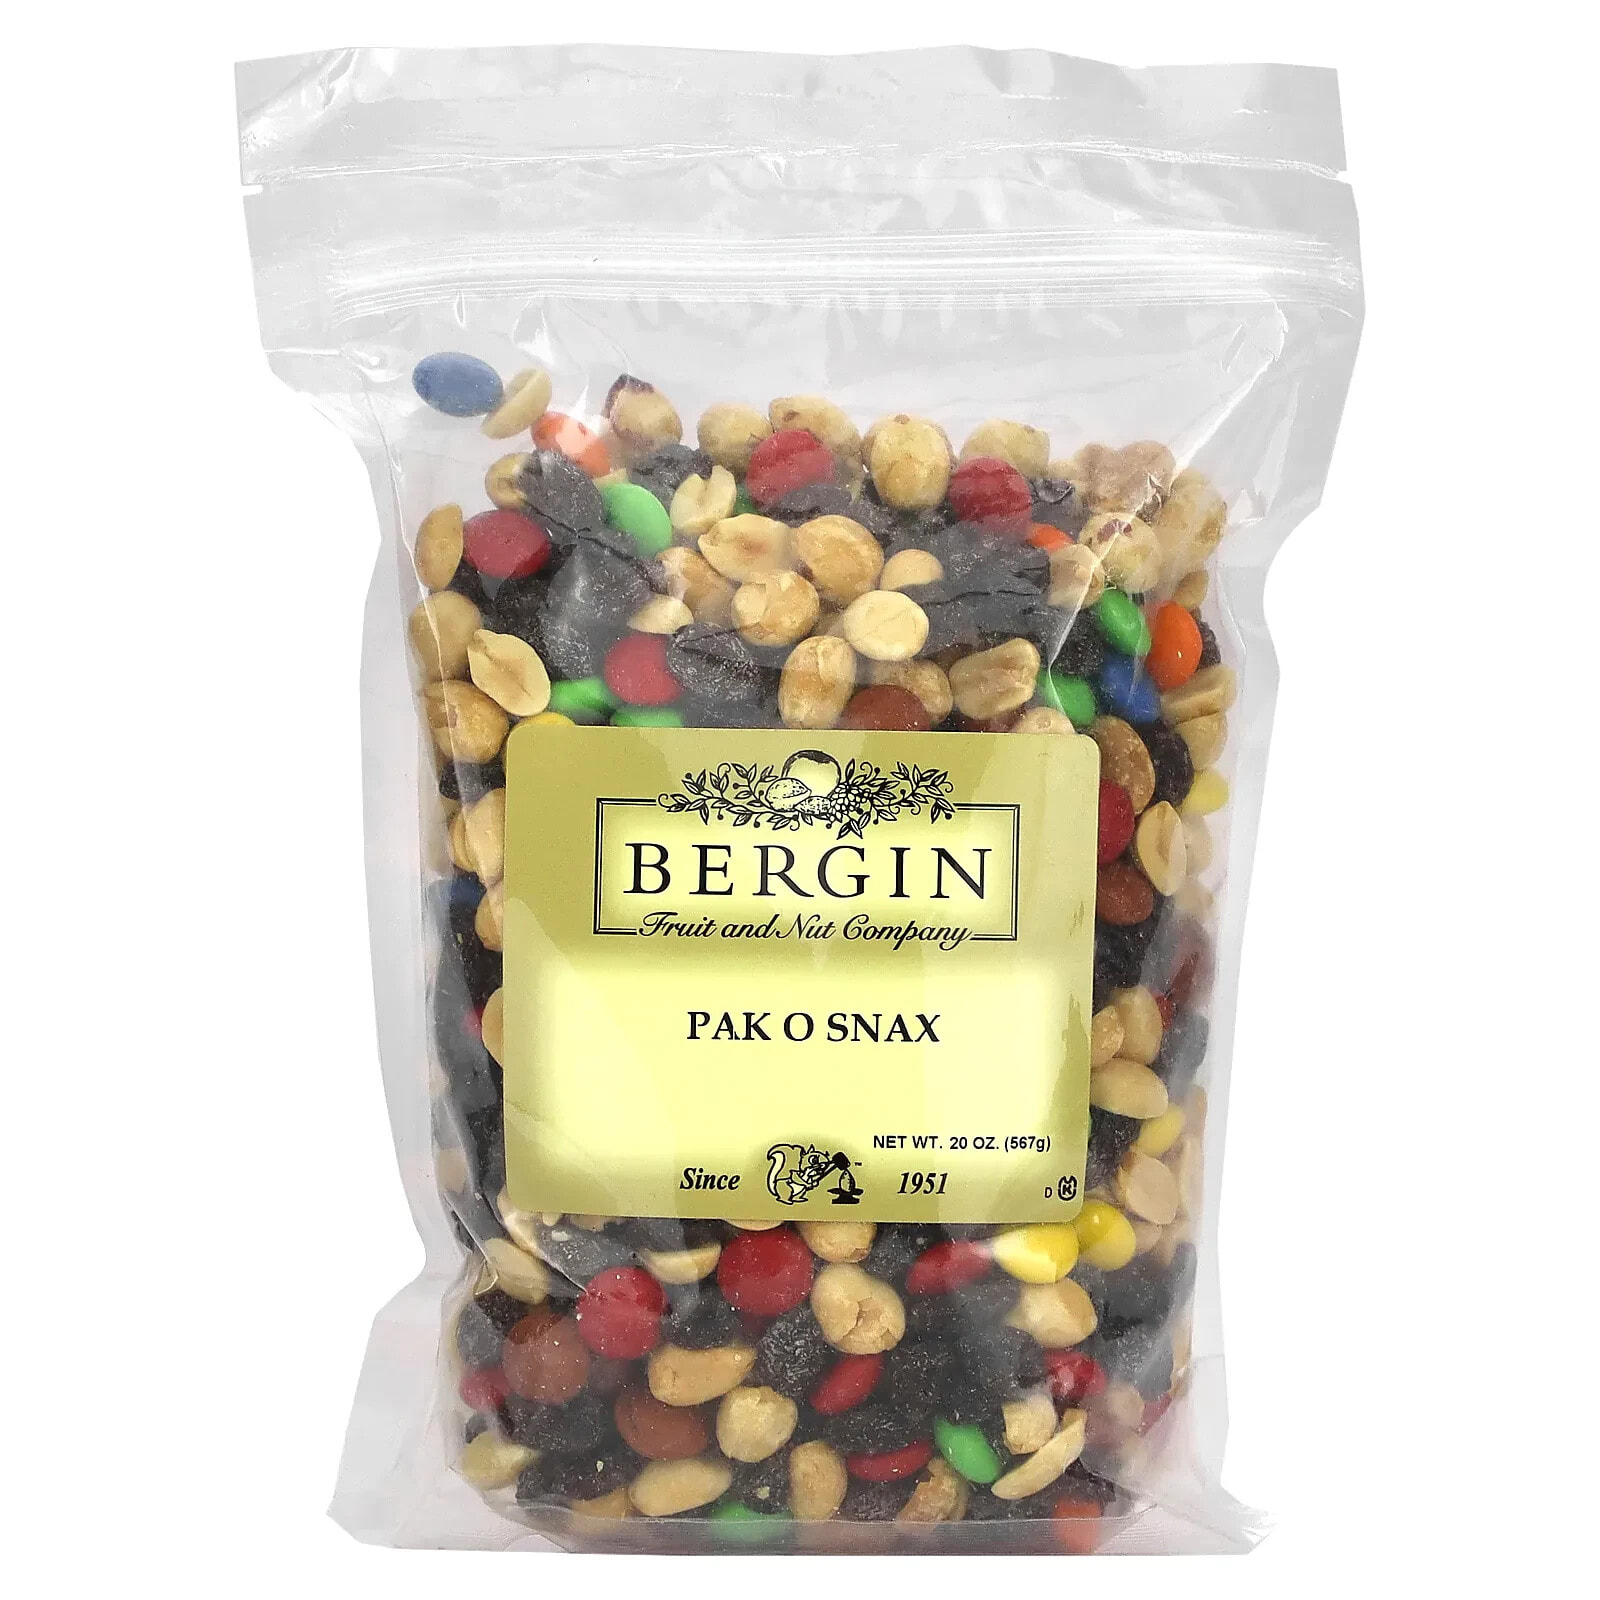 Bergin Fruit and Nut Company, Pak O Snax, 567 г (20 унций)